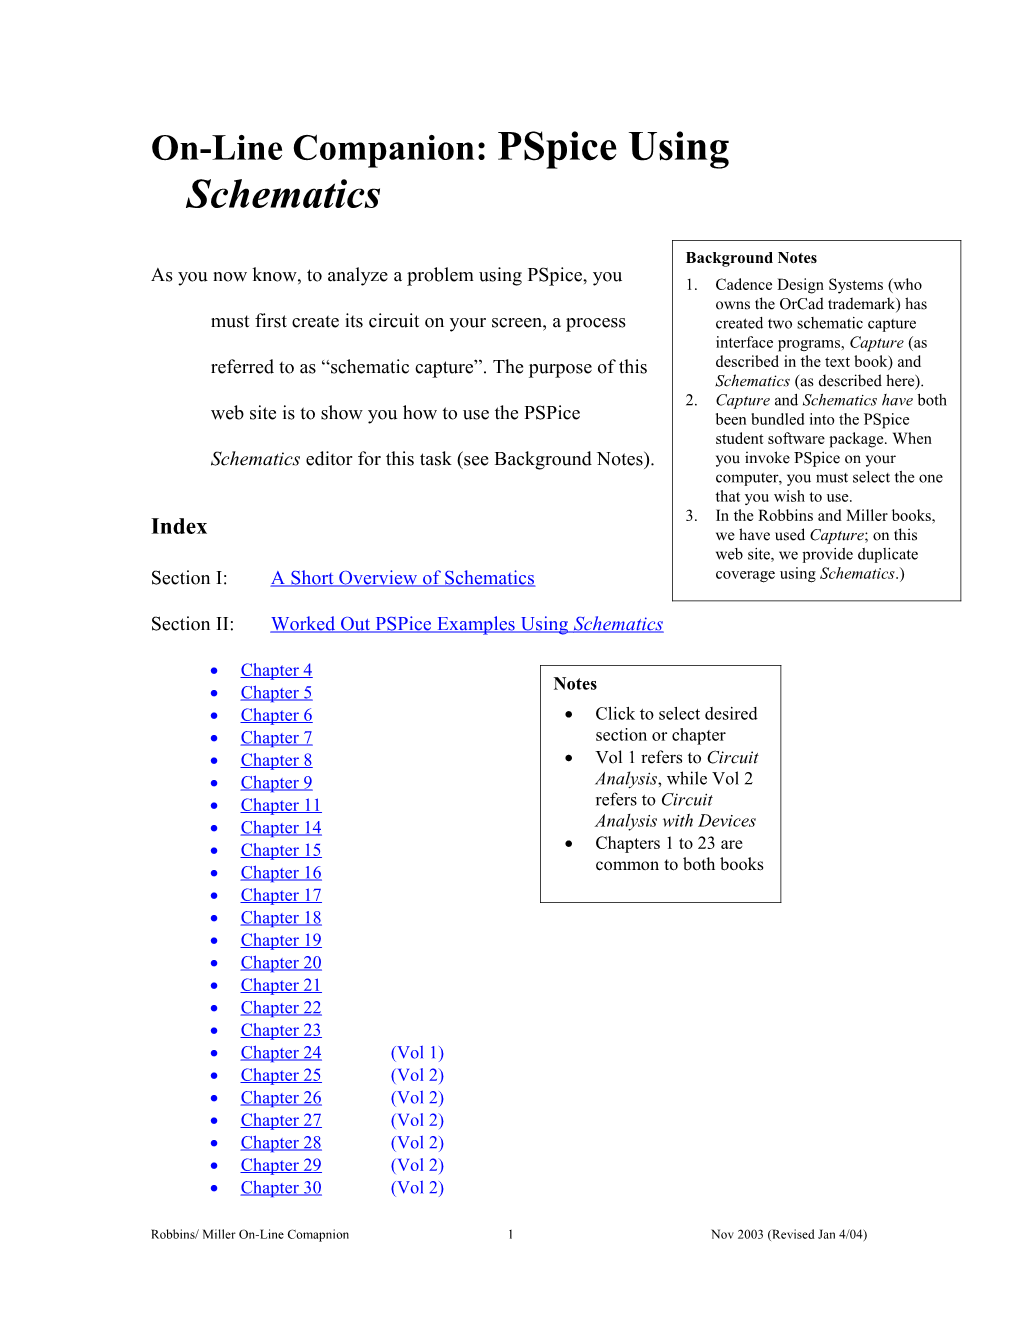 On-Line Companion: Pspice Using Schematics